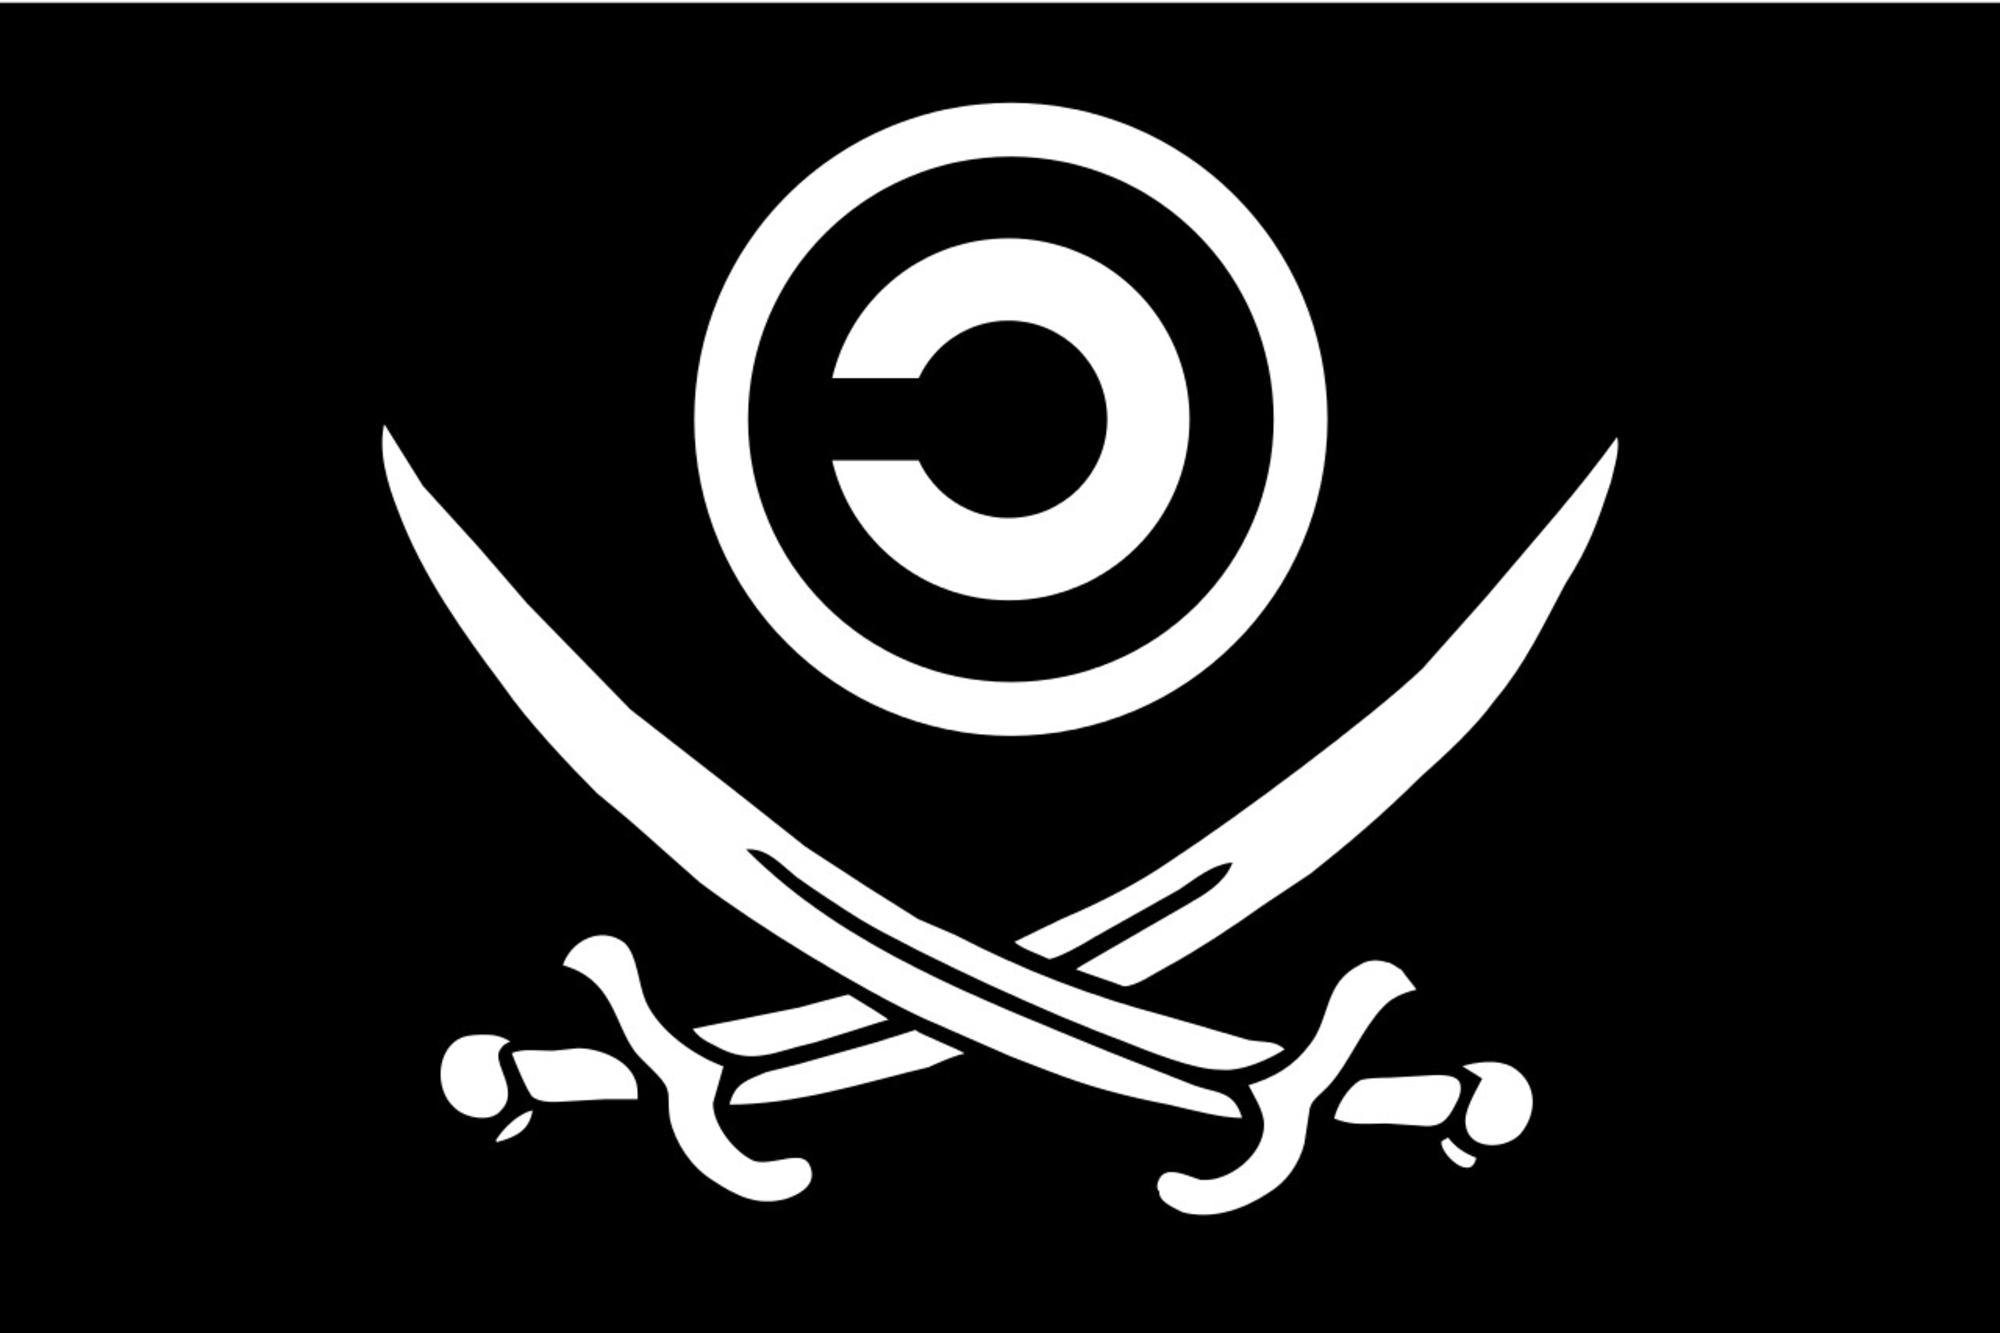 Copyleft Pirate symbol